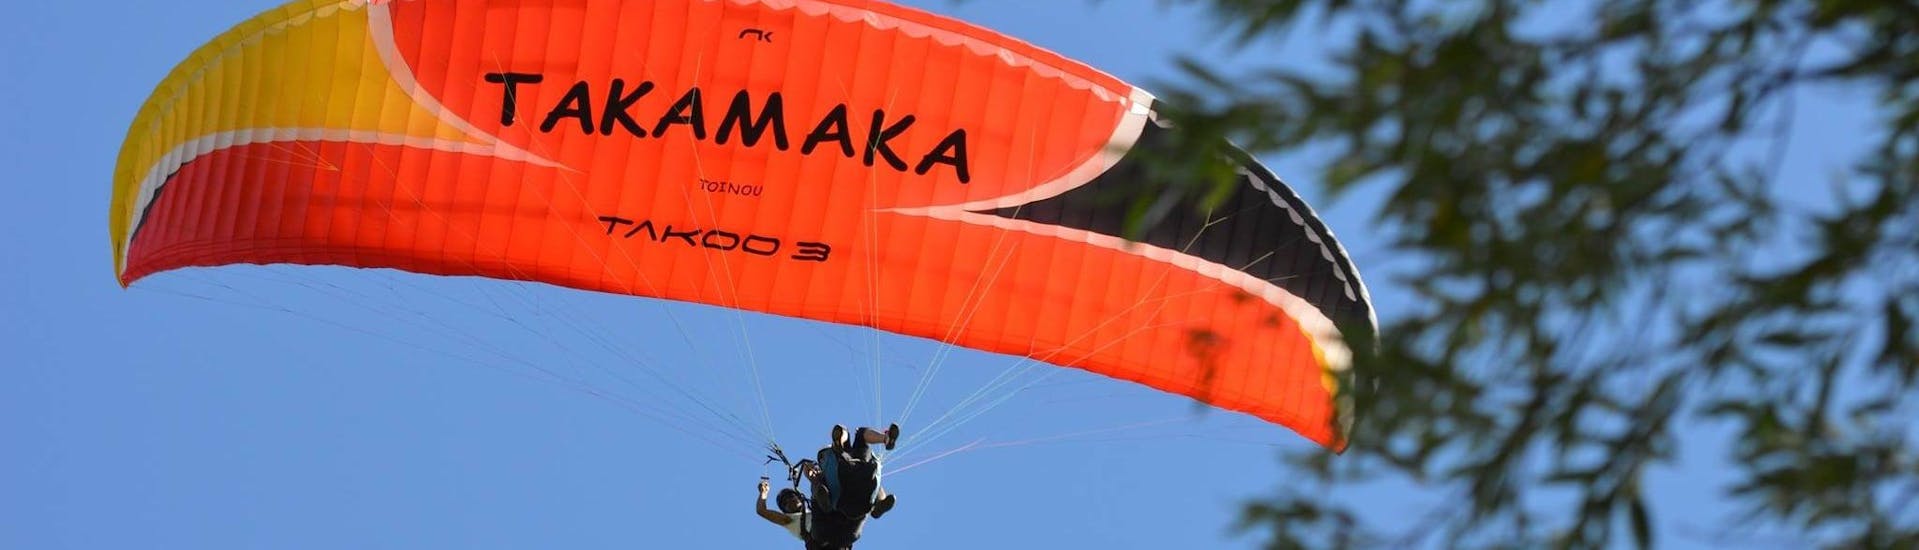 tandem-paragliding-for-kids-4-14-years-aix-les-bains-takamaka-aix-les-bains-hero